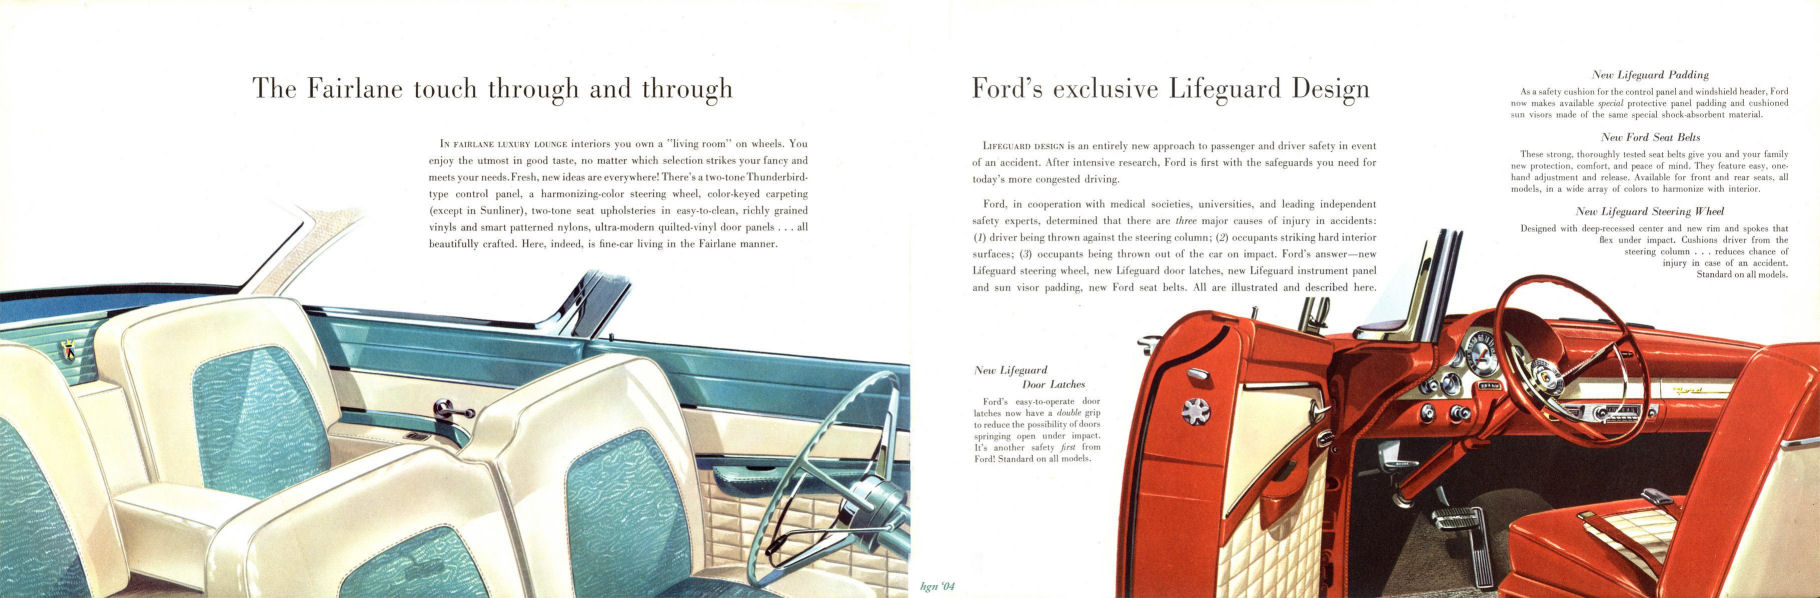 1956 Ford Fairlane-06